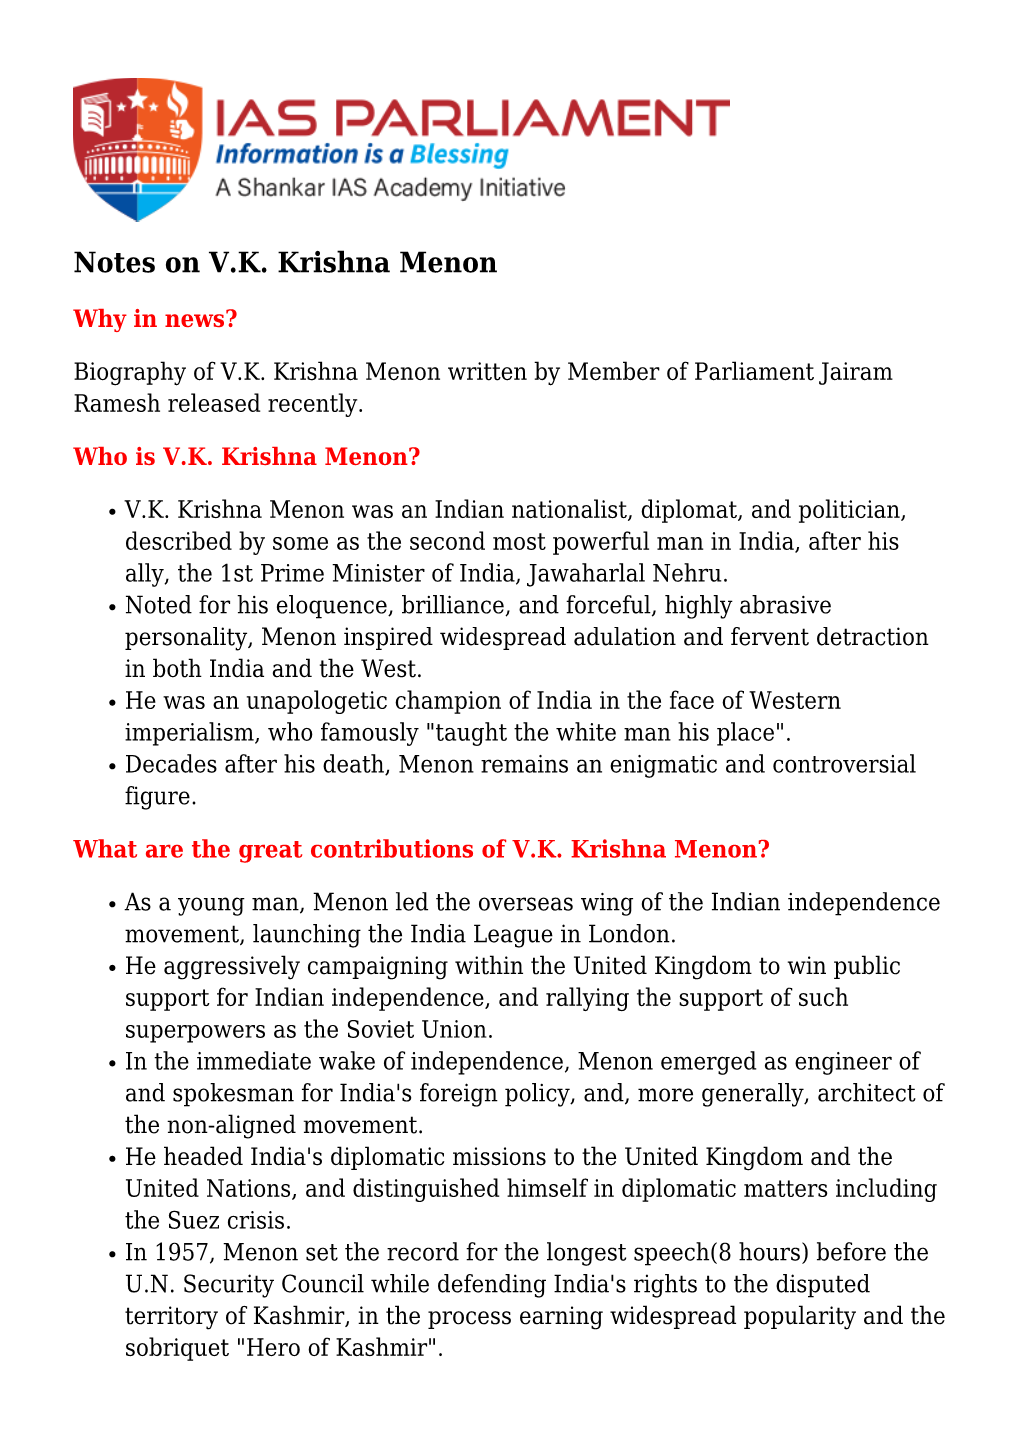 Notes on V.K. Krishna Menon